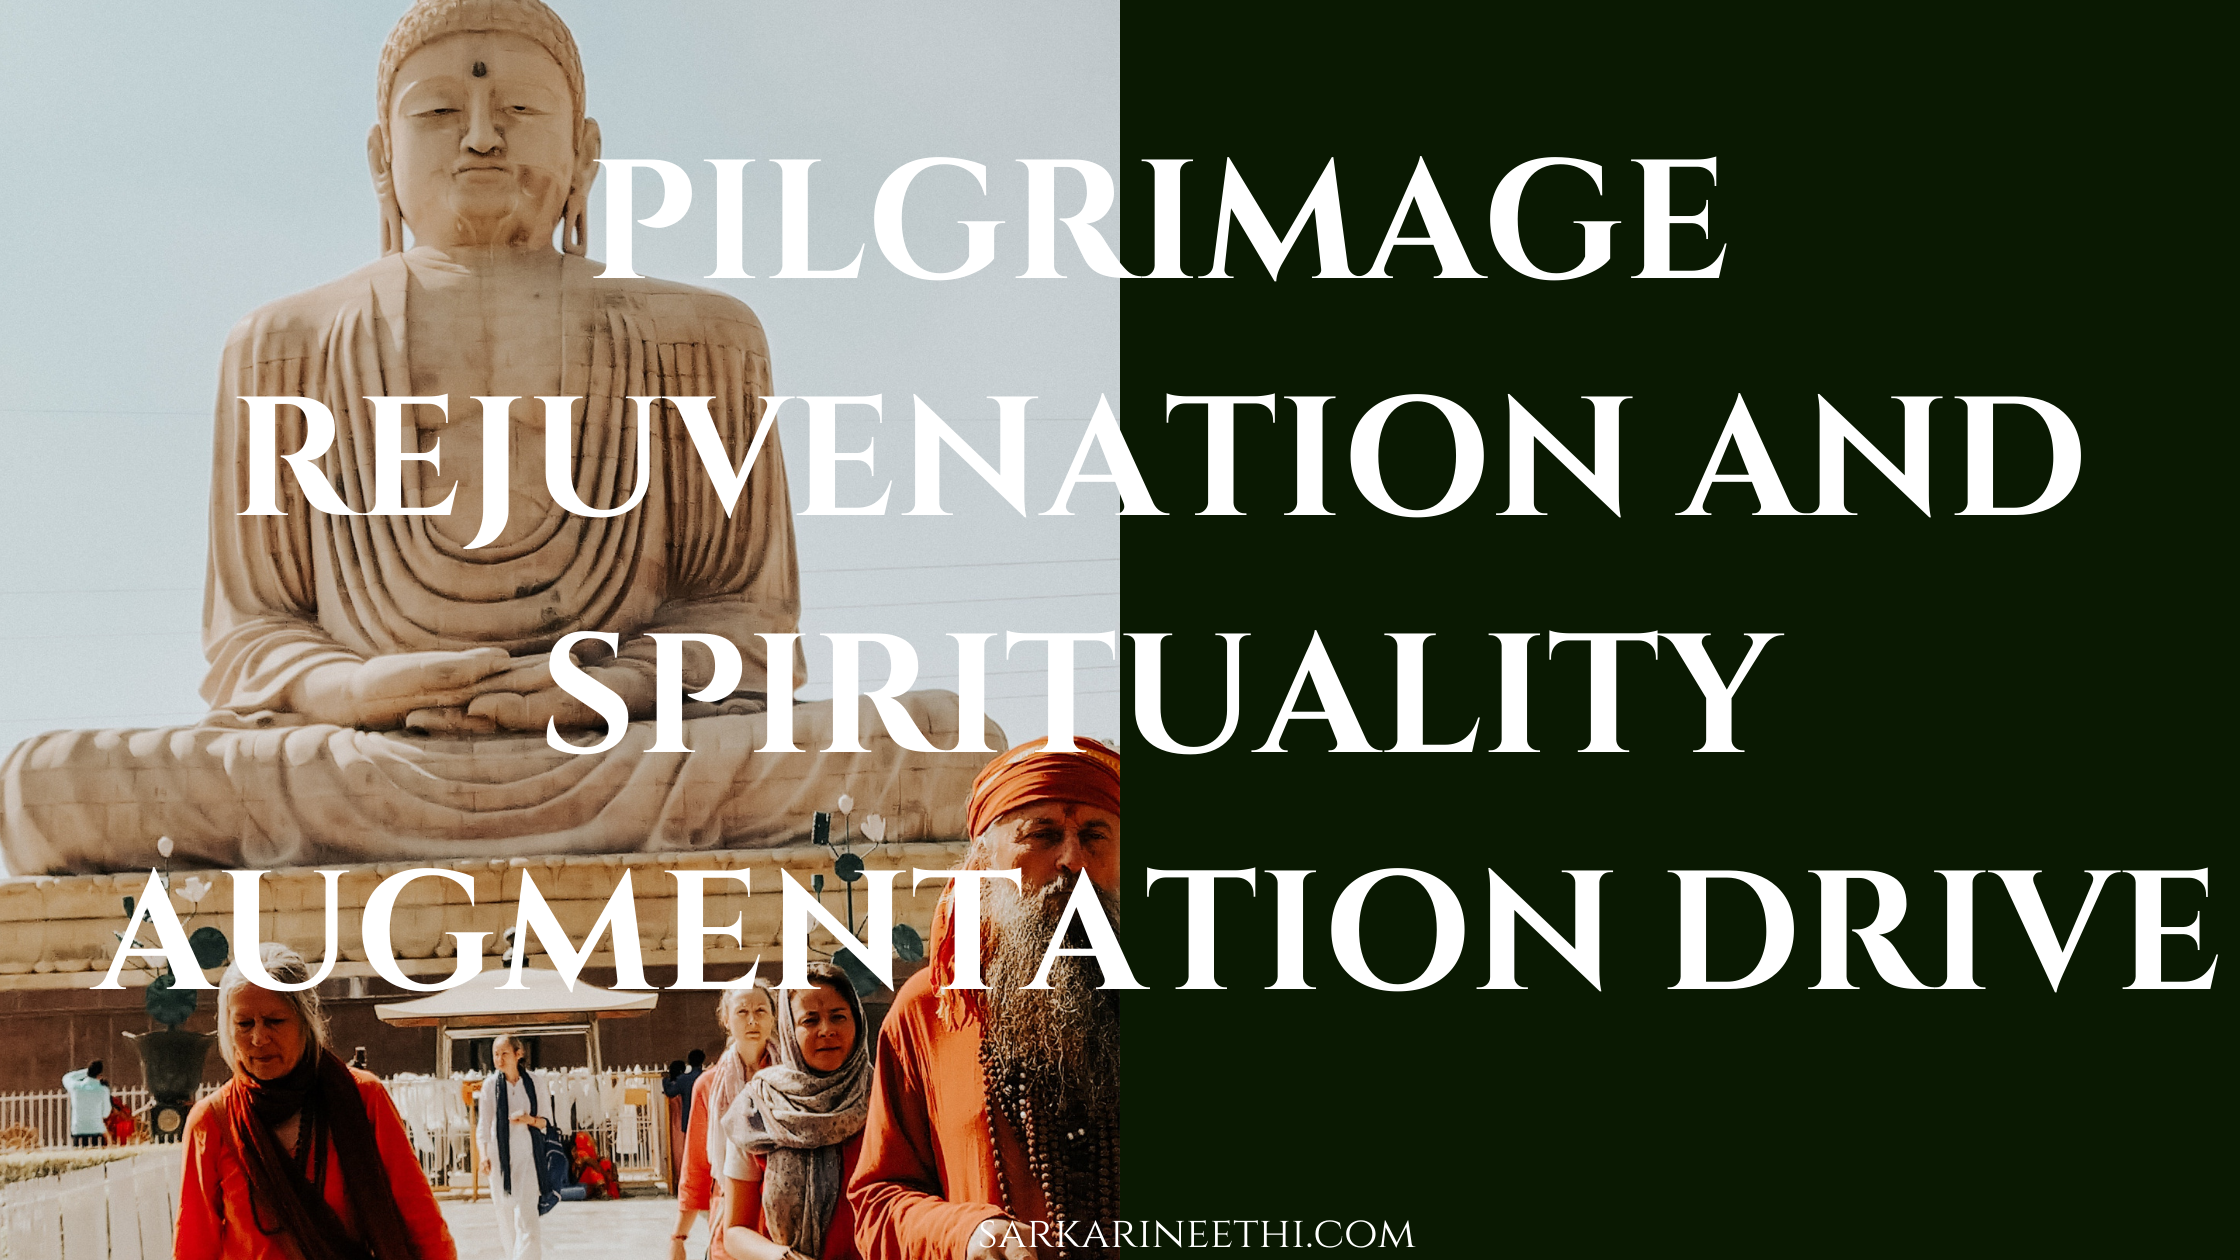 Pilgrimage-rejuvenation-and-Spirituatlity-augmentation-drive